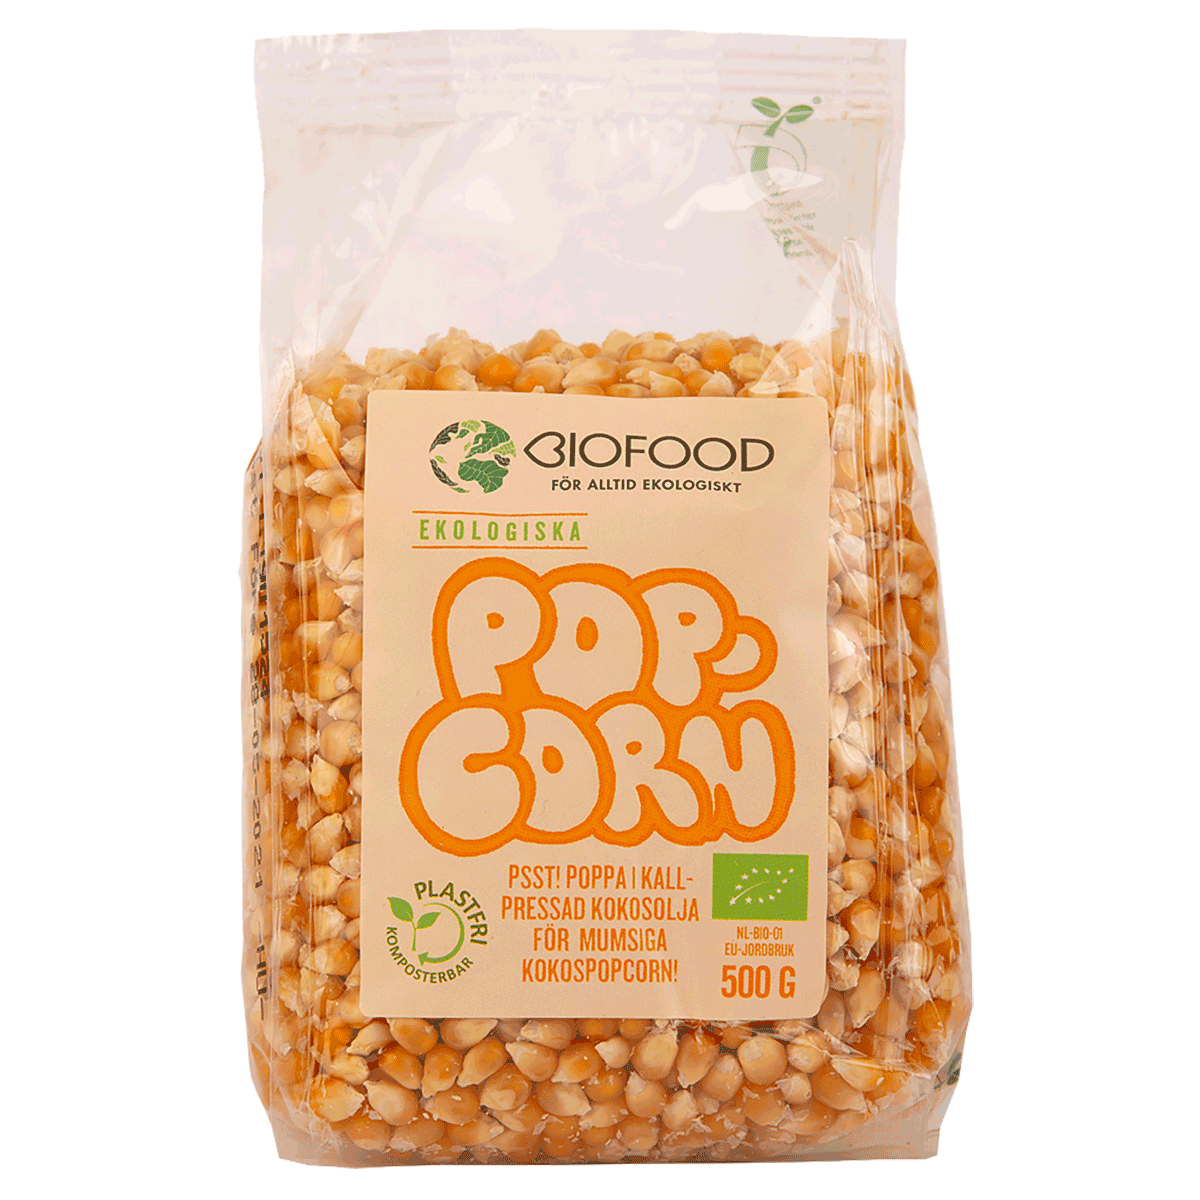 Popcorn från Biofood